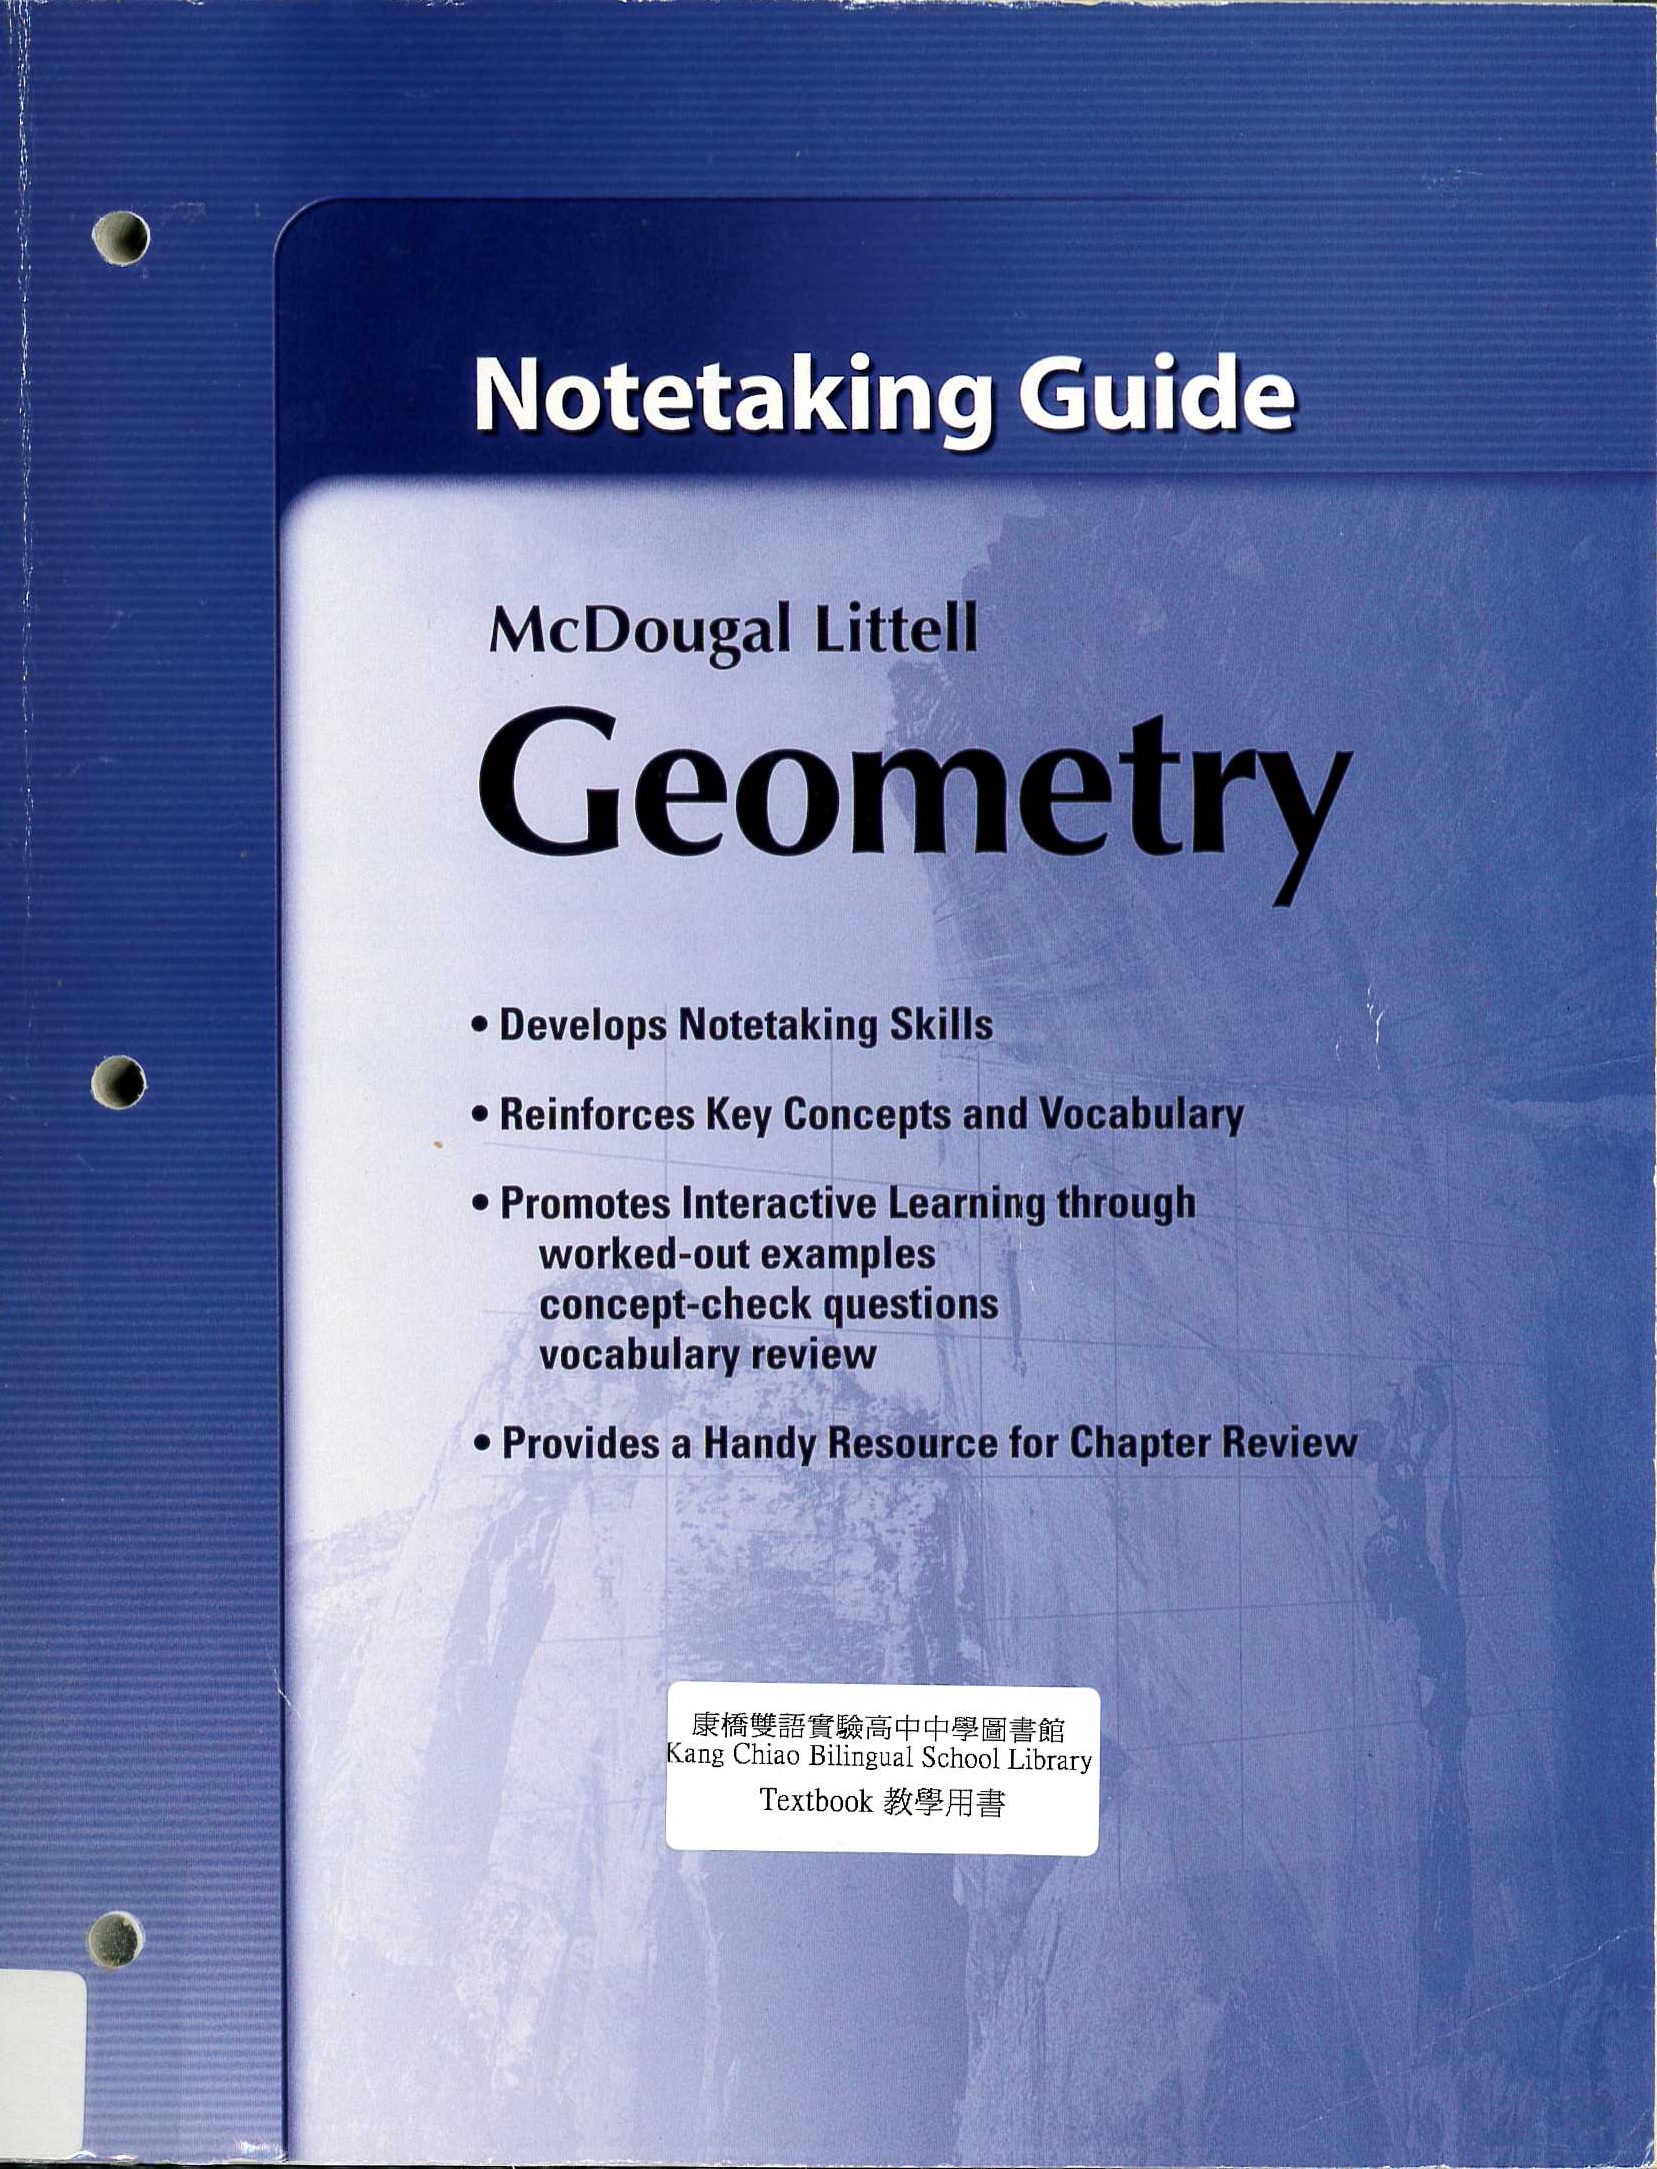 McDougal Littell geometry  : notetaking guide.